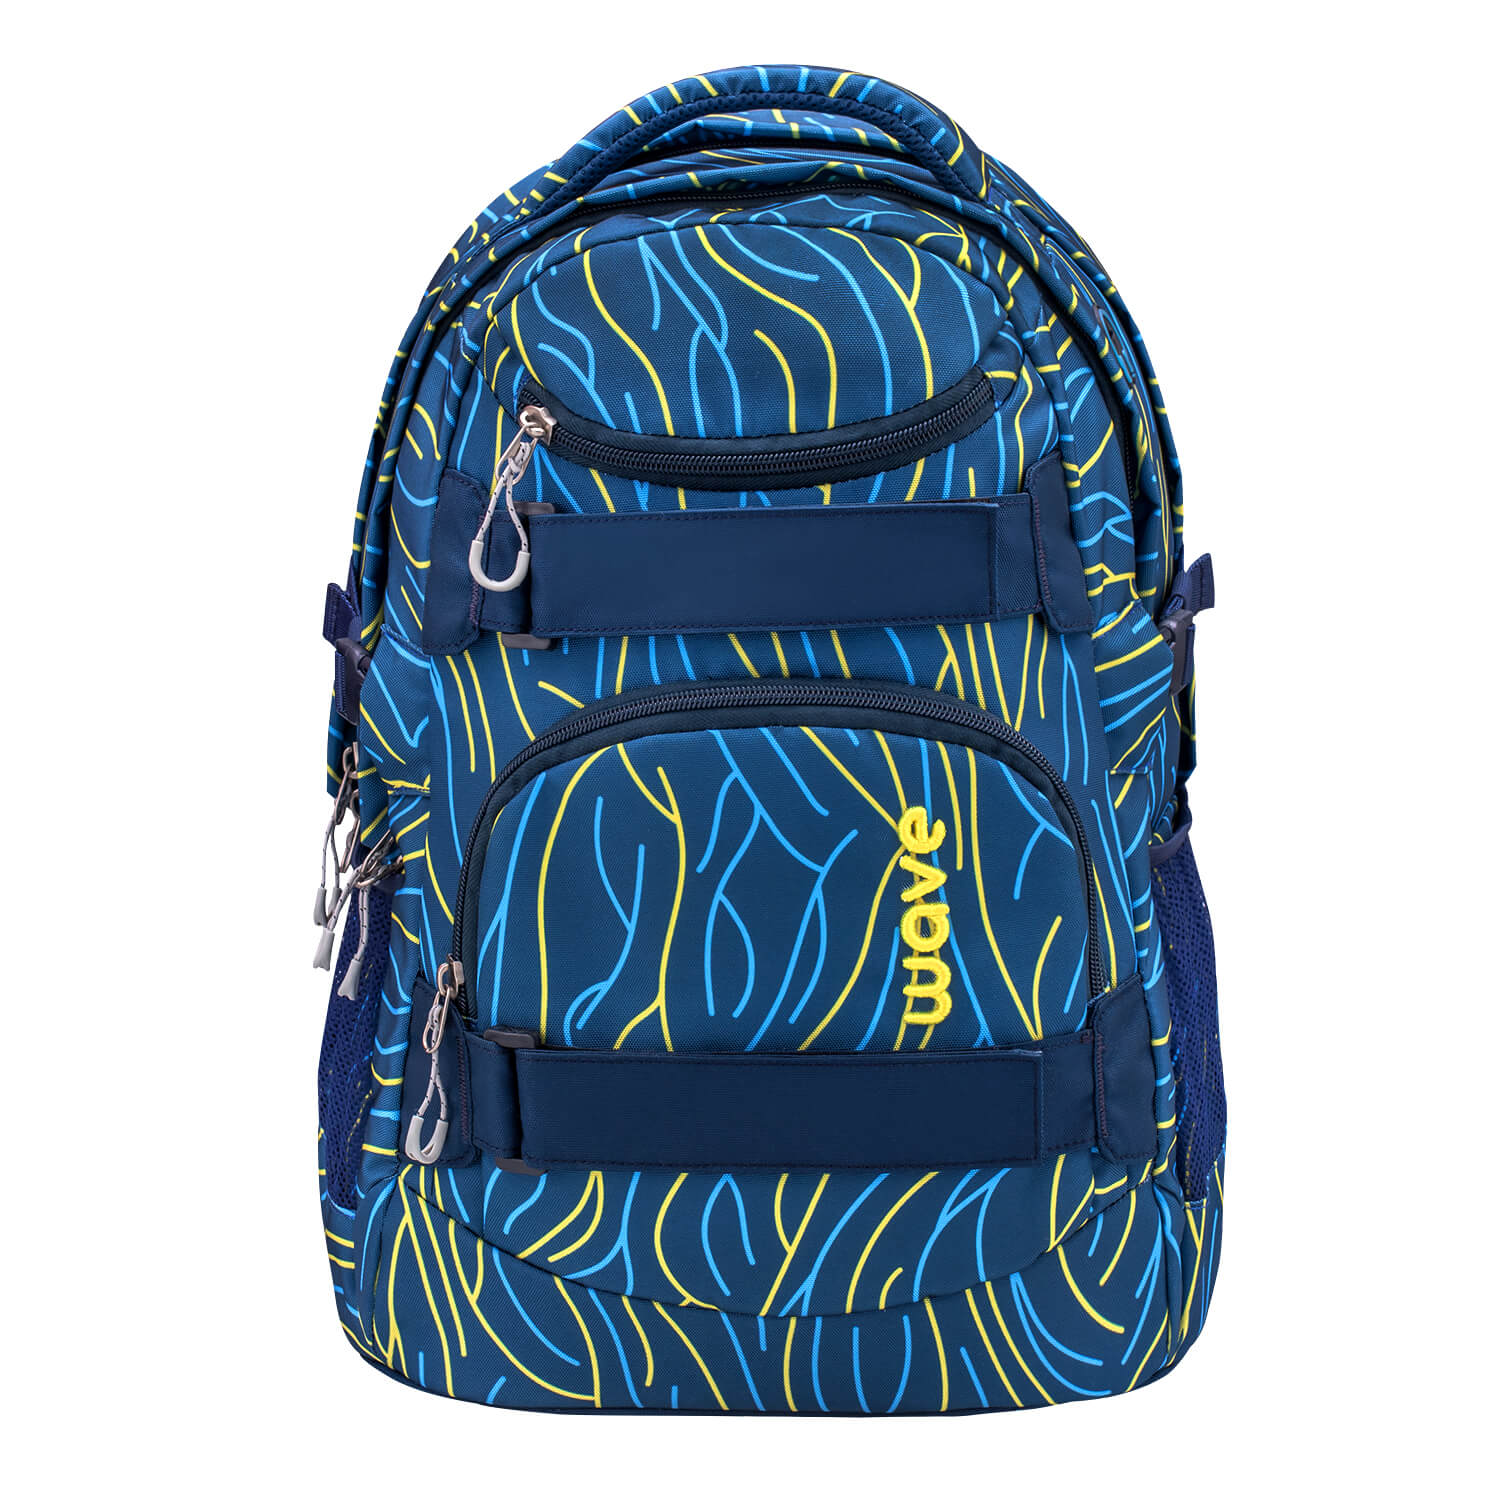 Wave Infinity Yellow Lines school backpack Set 2 Pcs